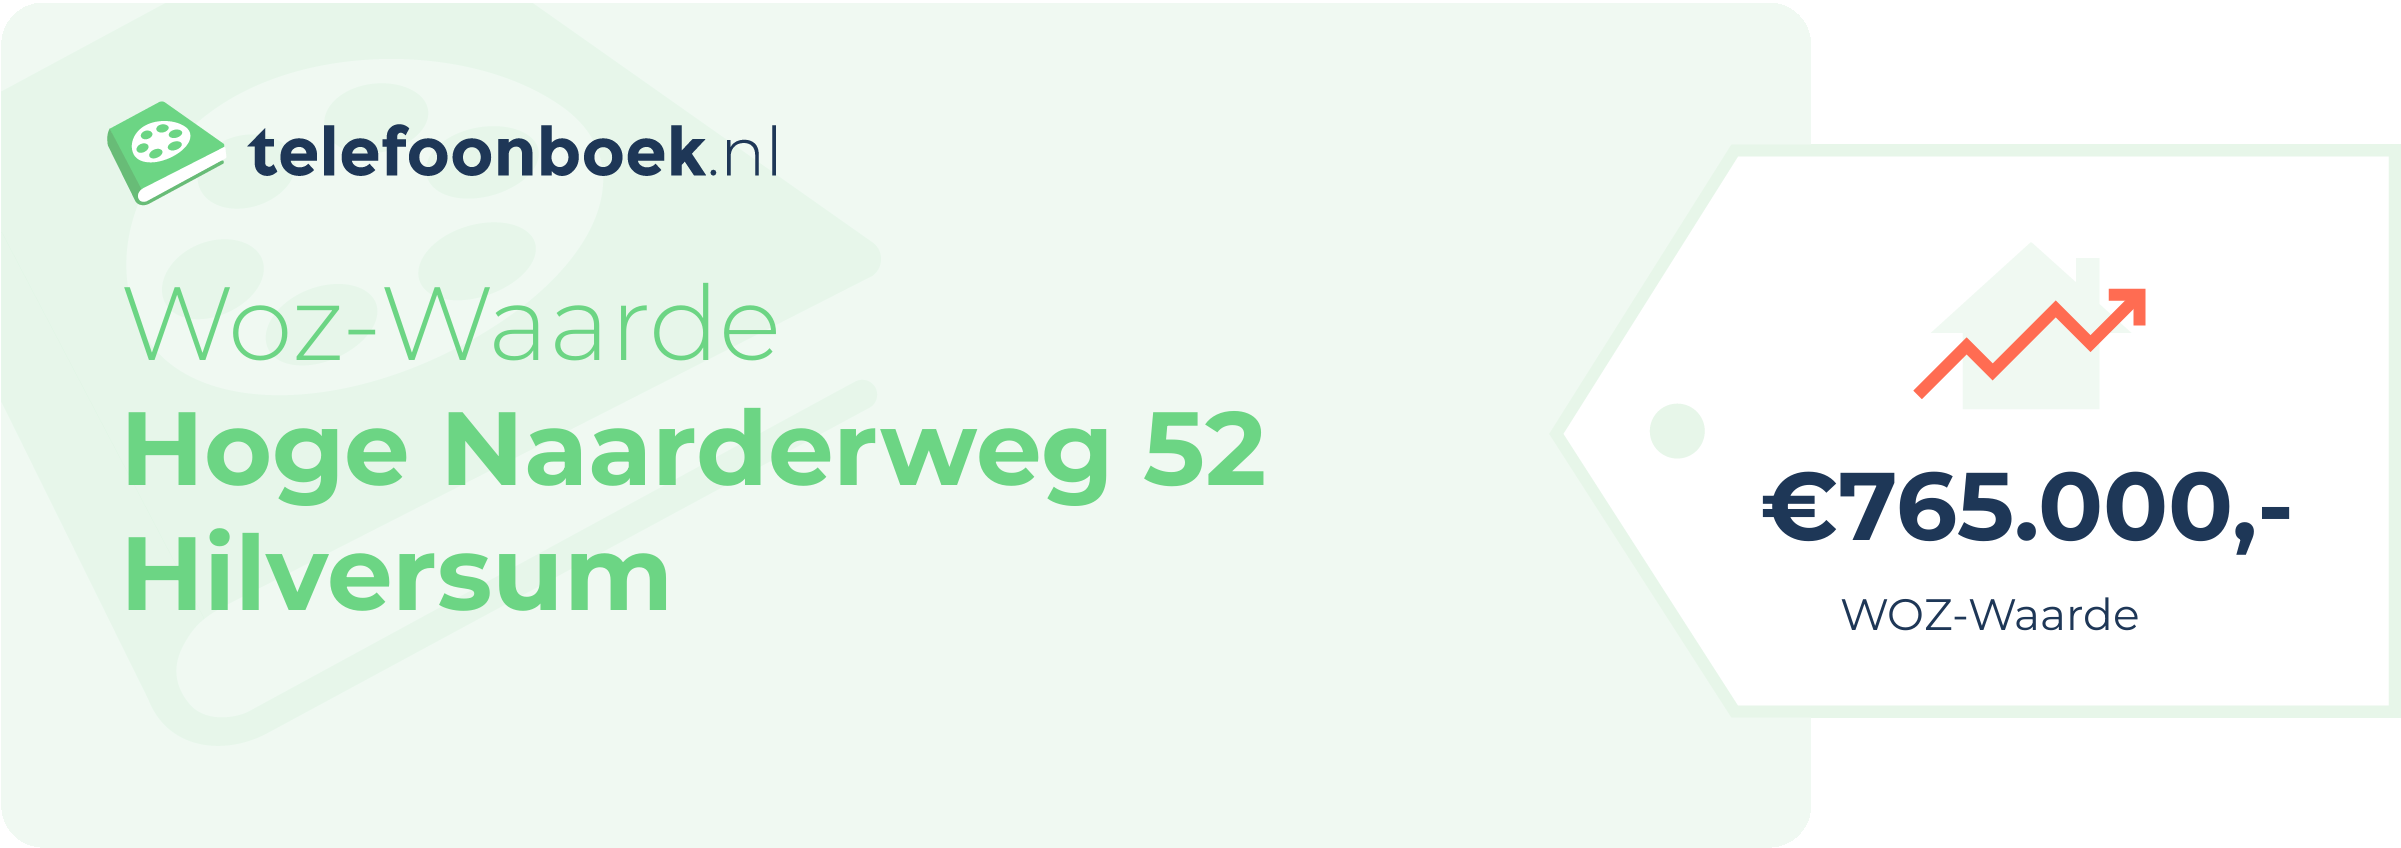 WOZ-waarde Hoge Naarderweg 52 Hilversum